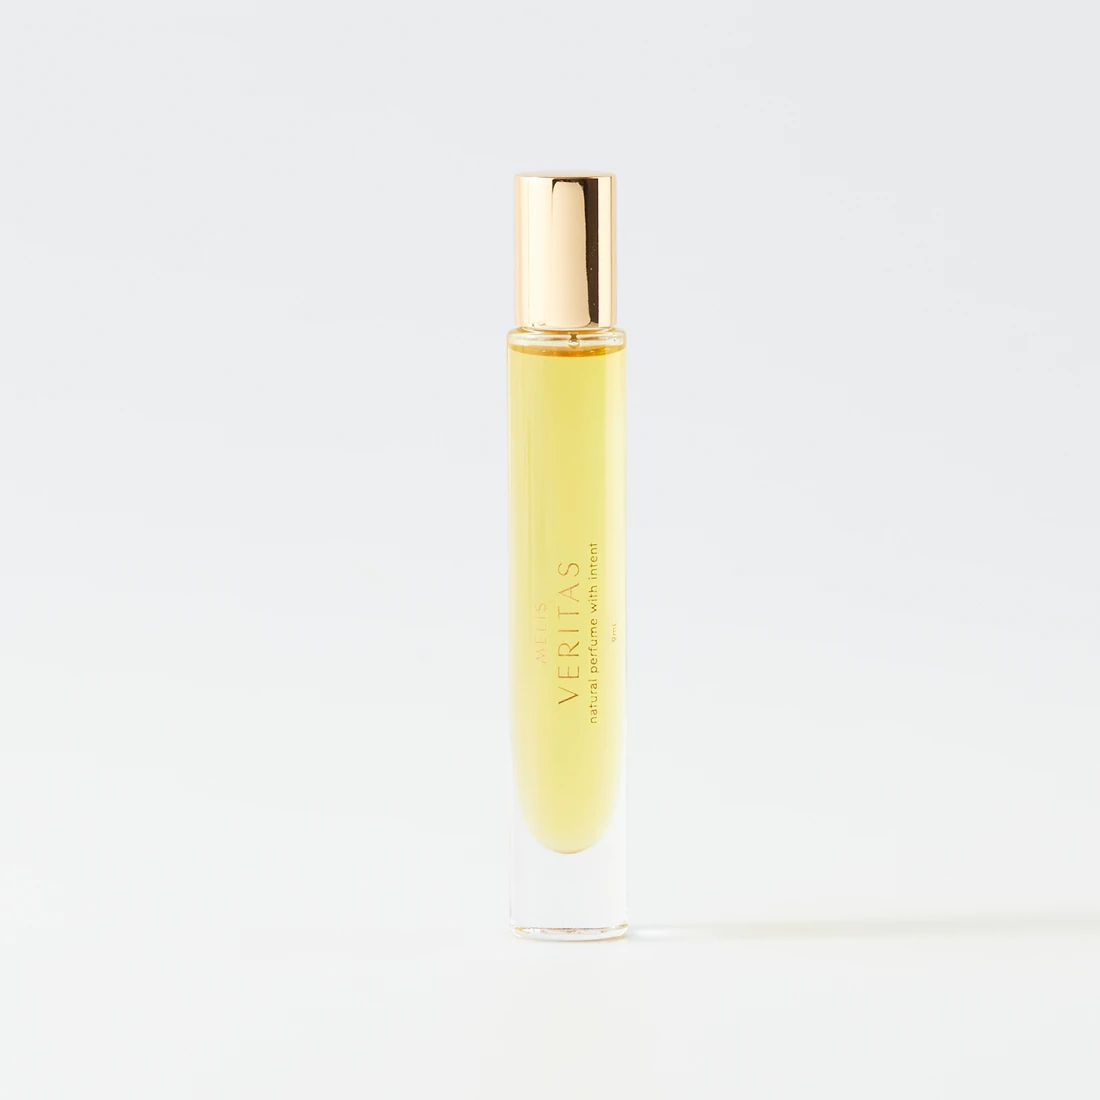 Veritas Sensor I Am perfume - a fragrance for women and men